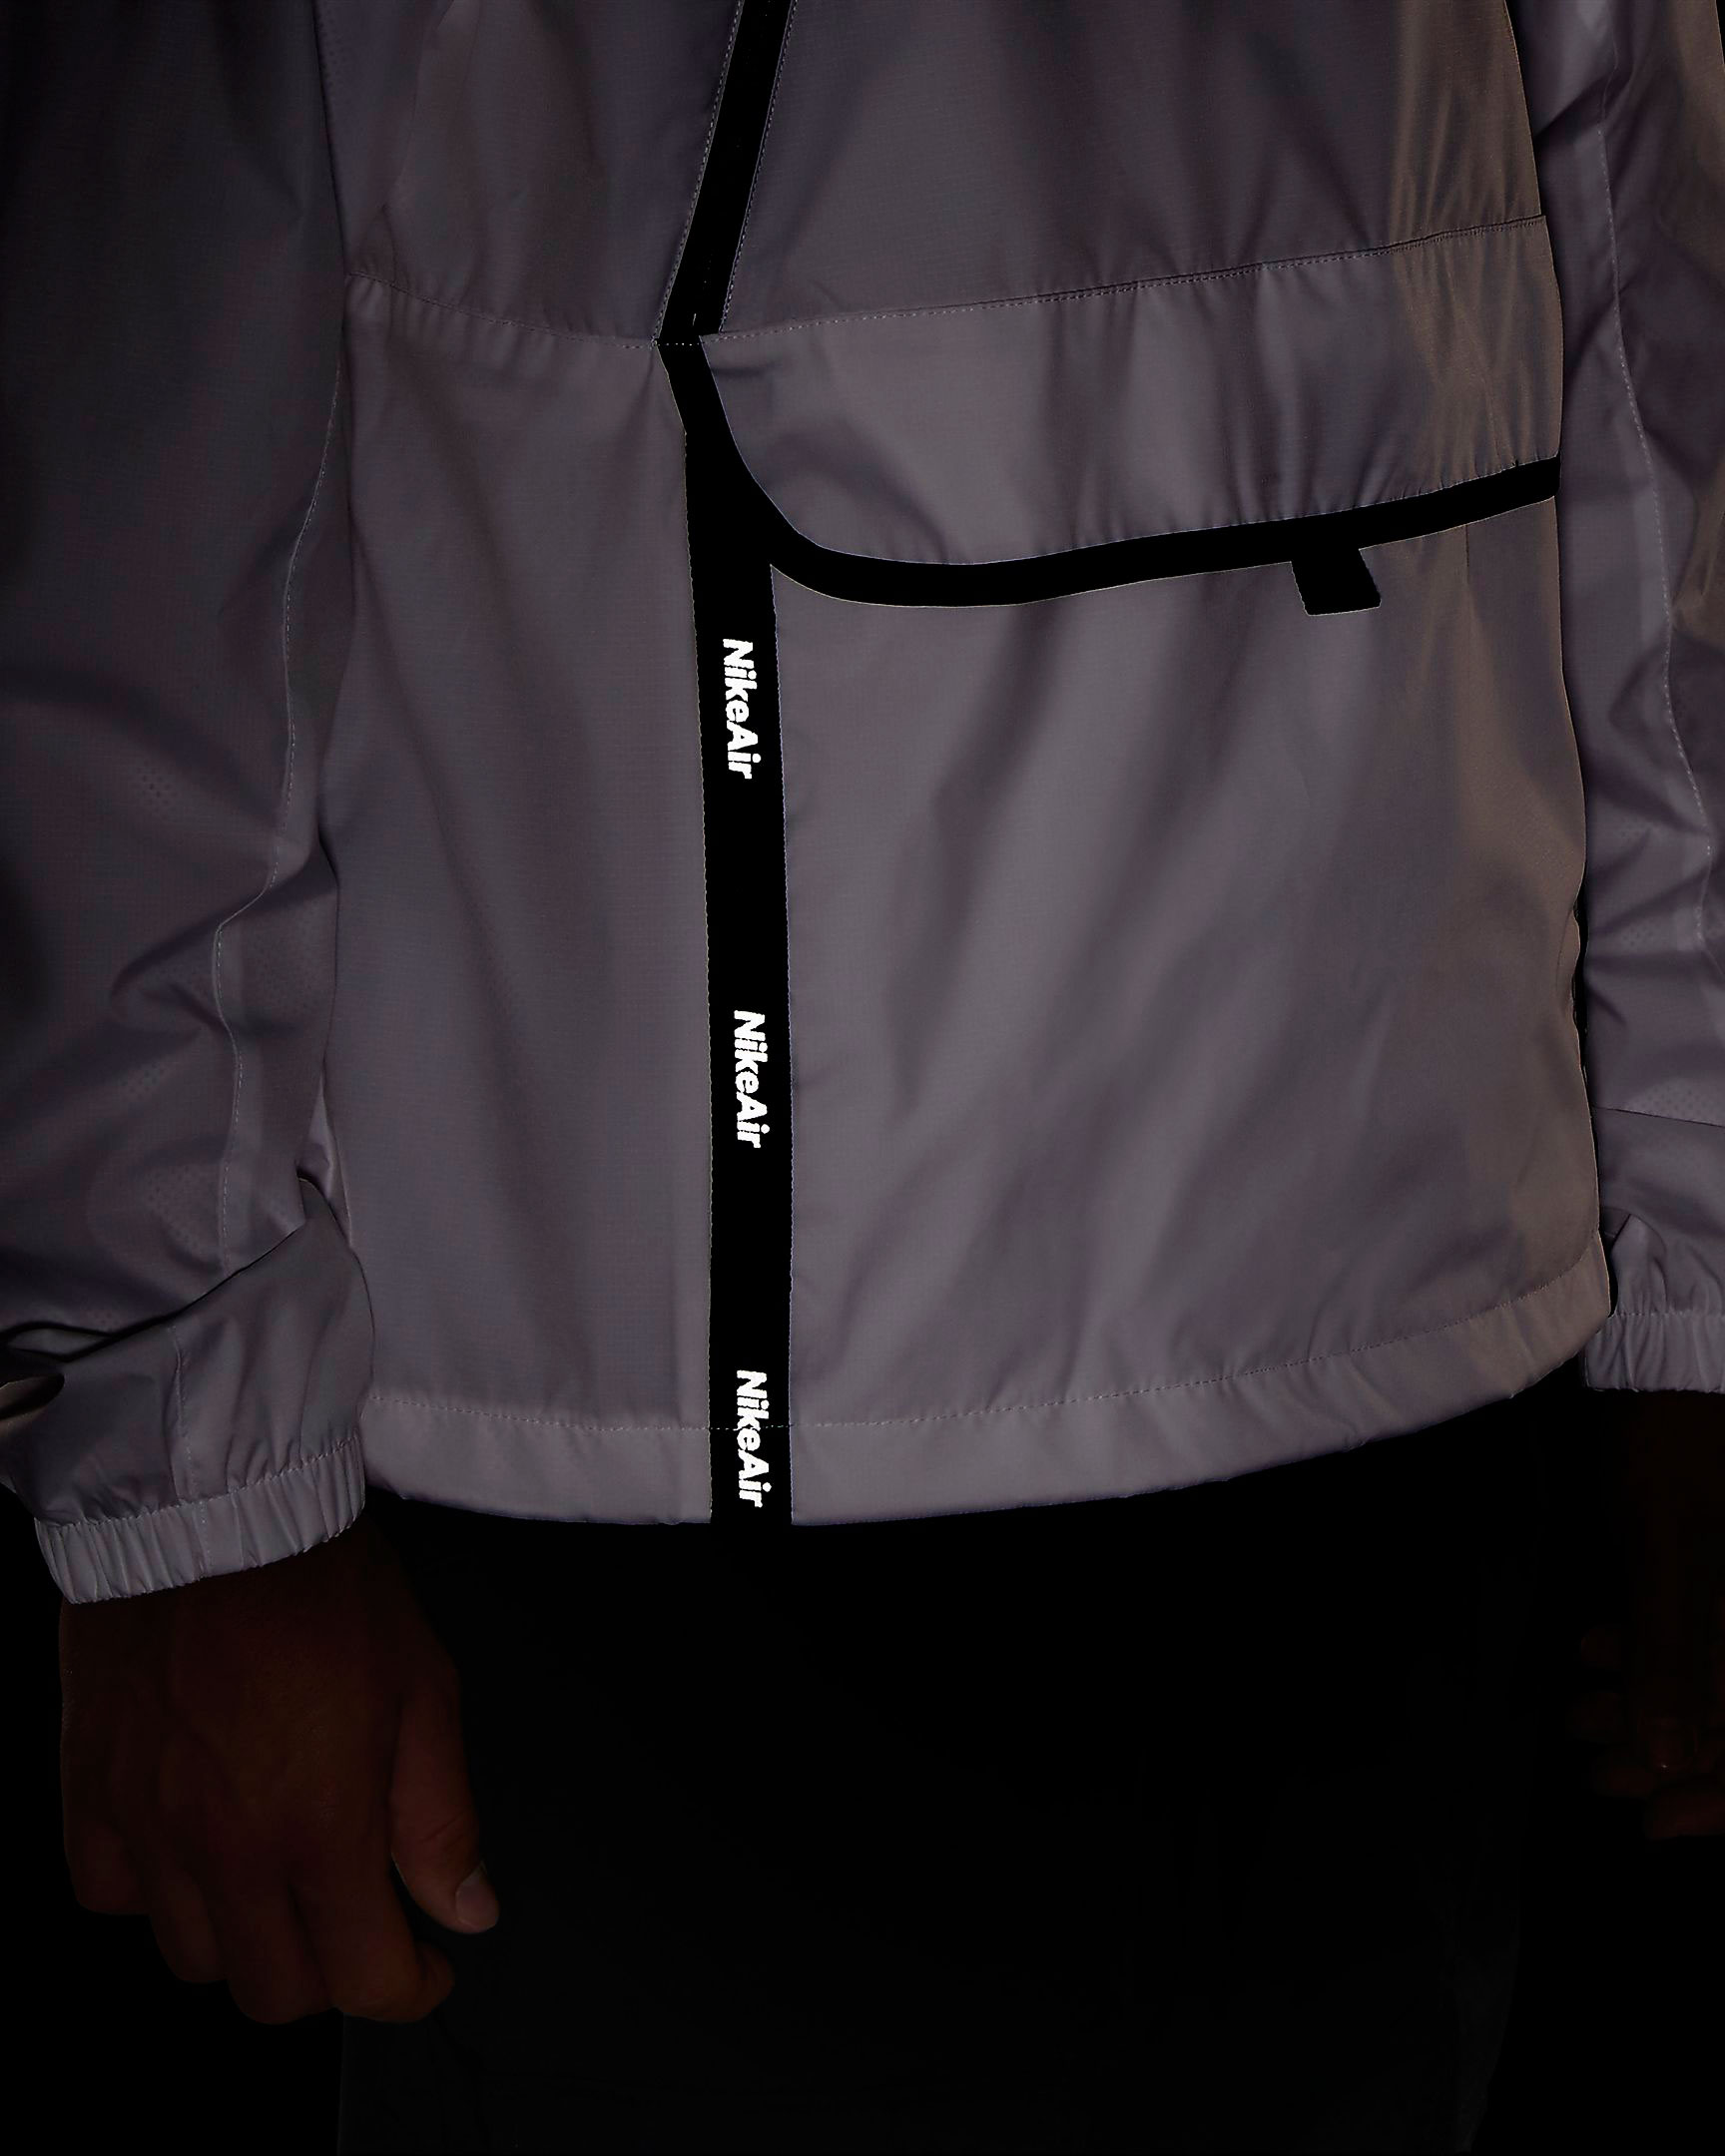 nike-air-utility-reflective-jacket-white-black-3